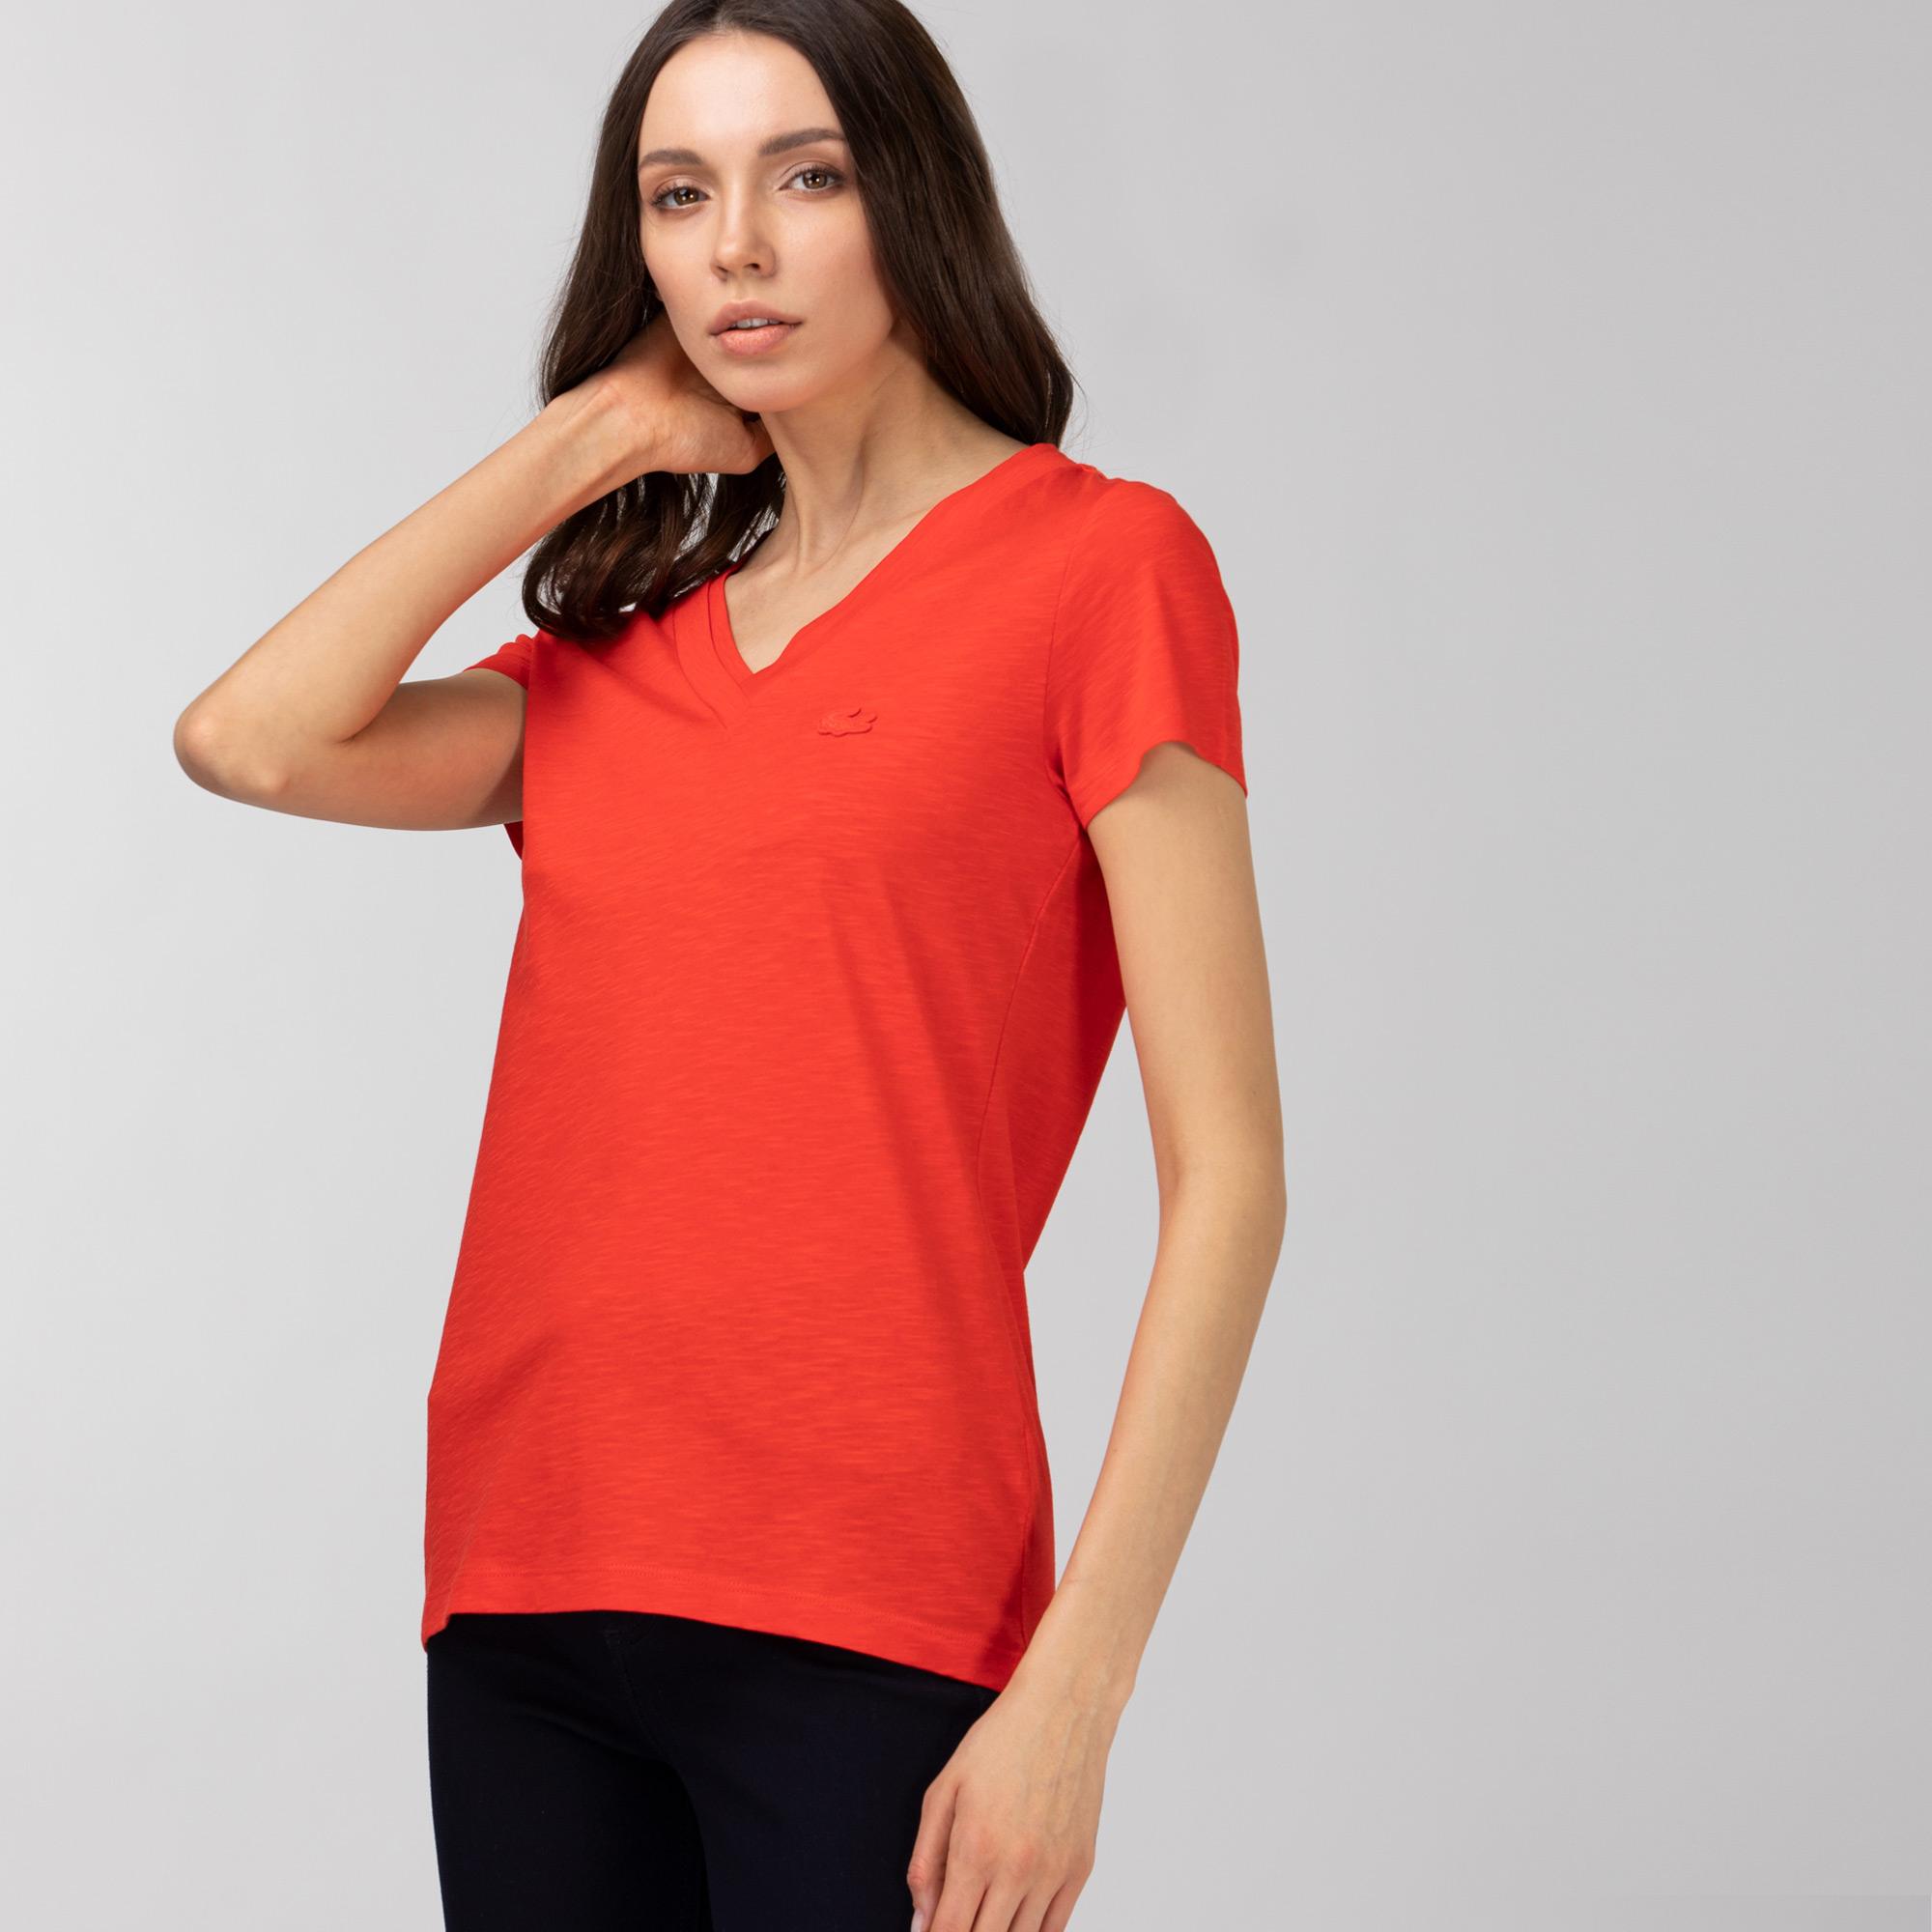 Lacoste Kadın Slim Fit V Yaka Kırmızı T-Shirt. 3